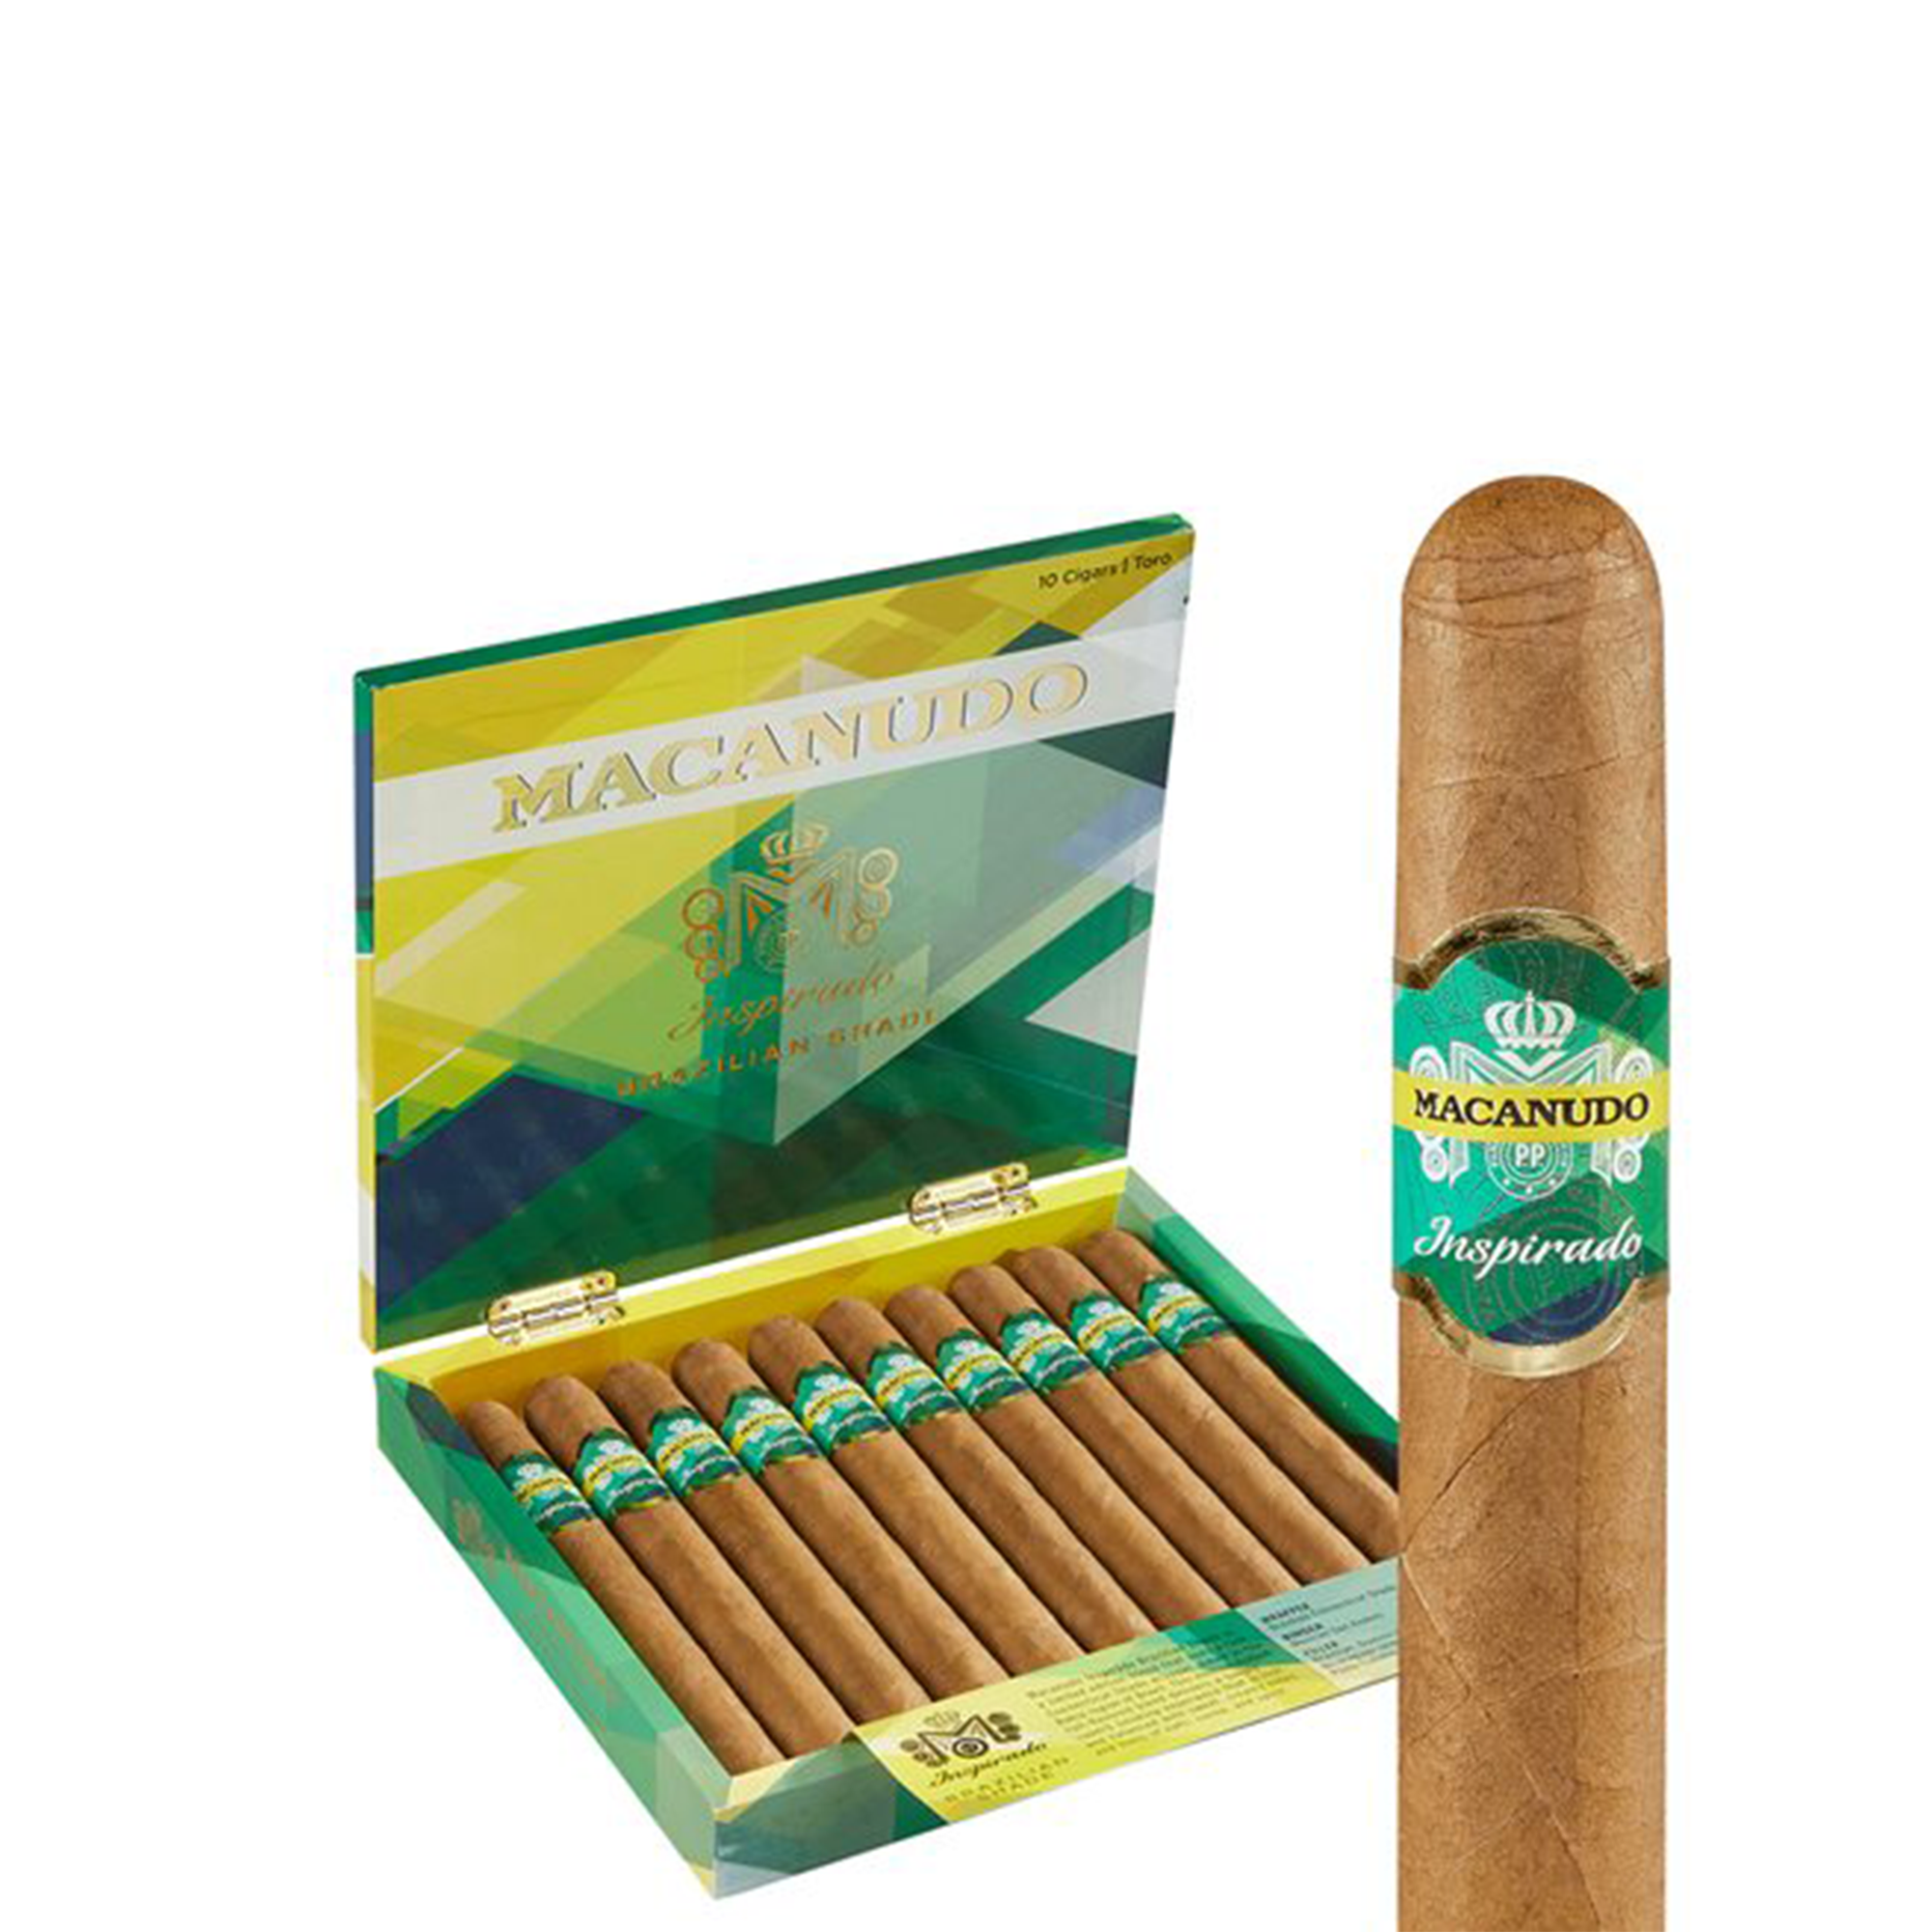 Macanudo-Inspirado-Brazil-cigars